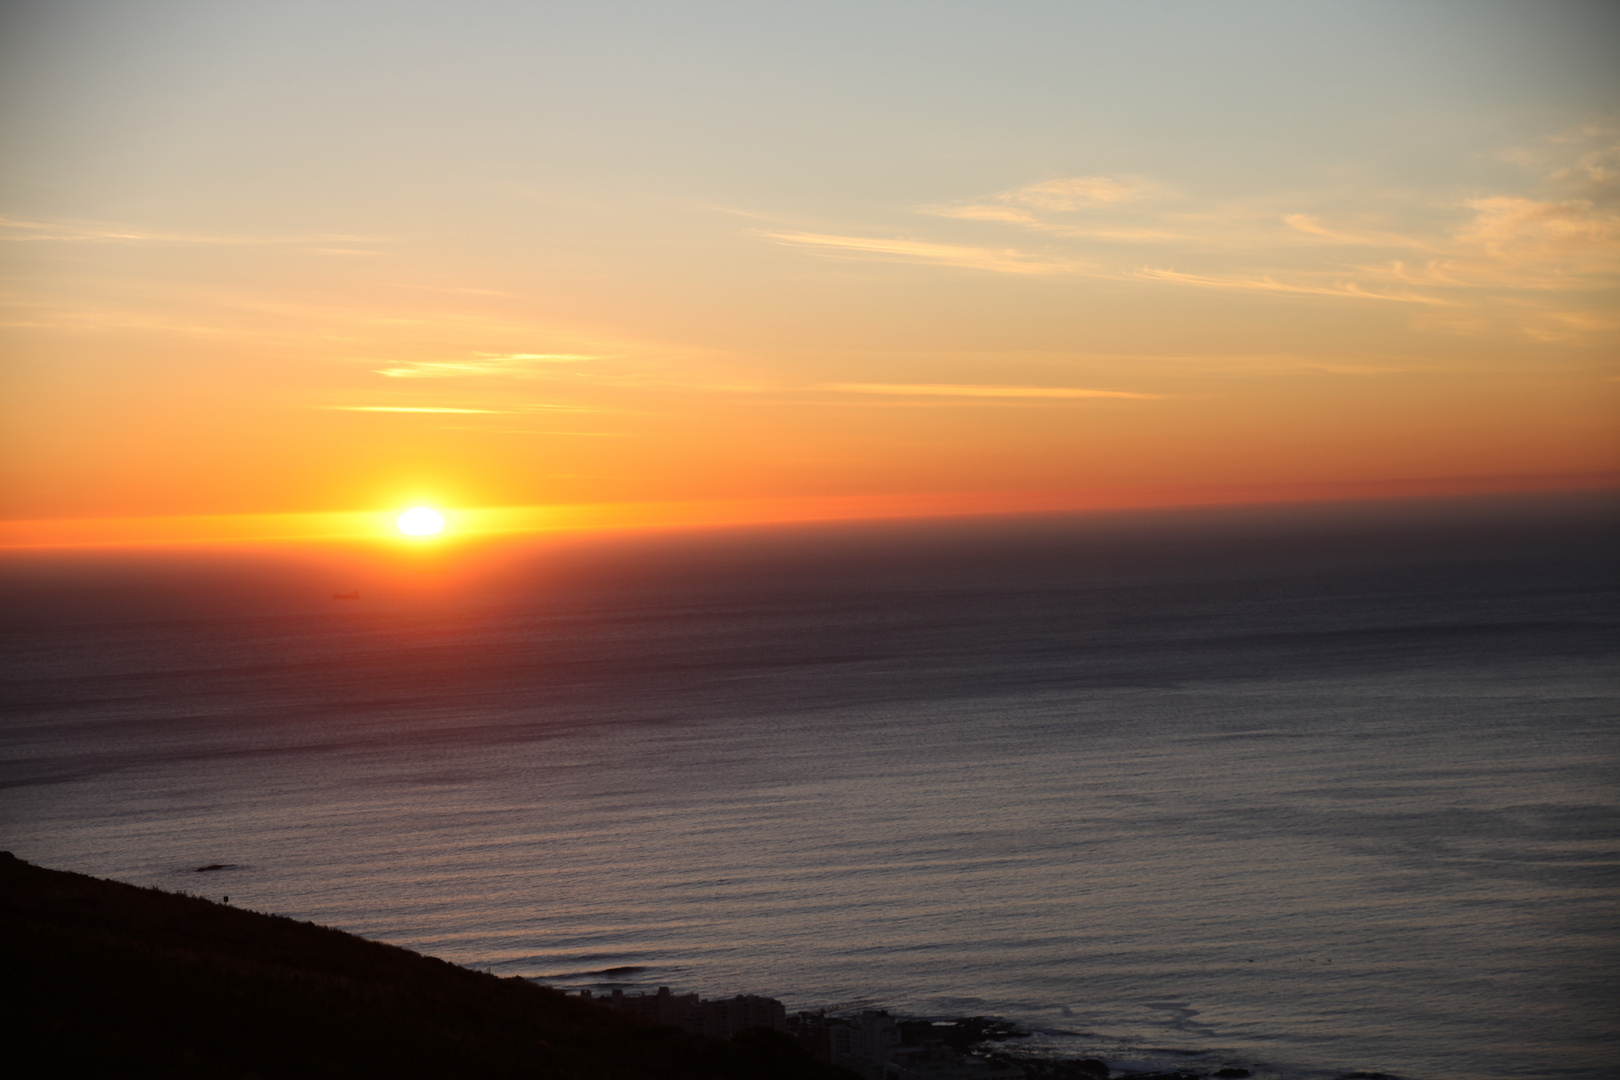 Sonnenuntergang in Kapstadt